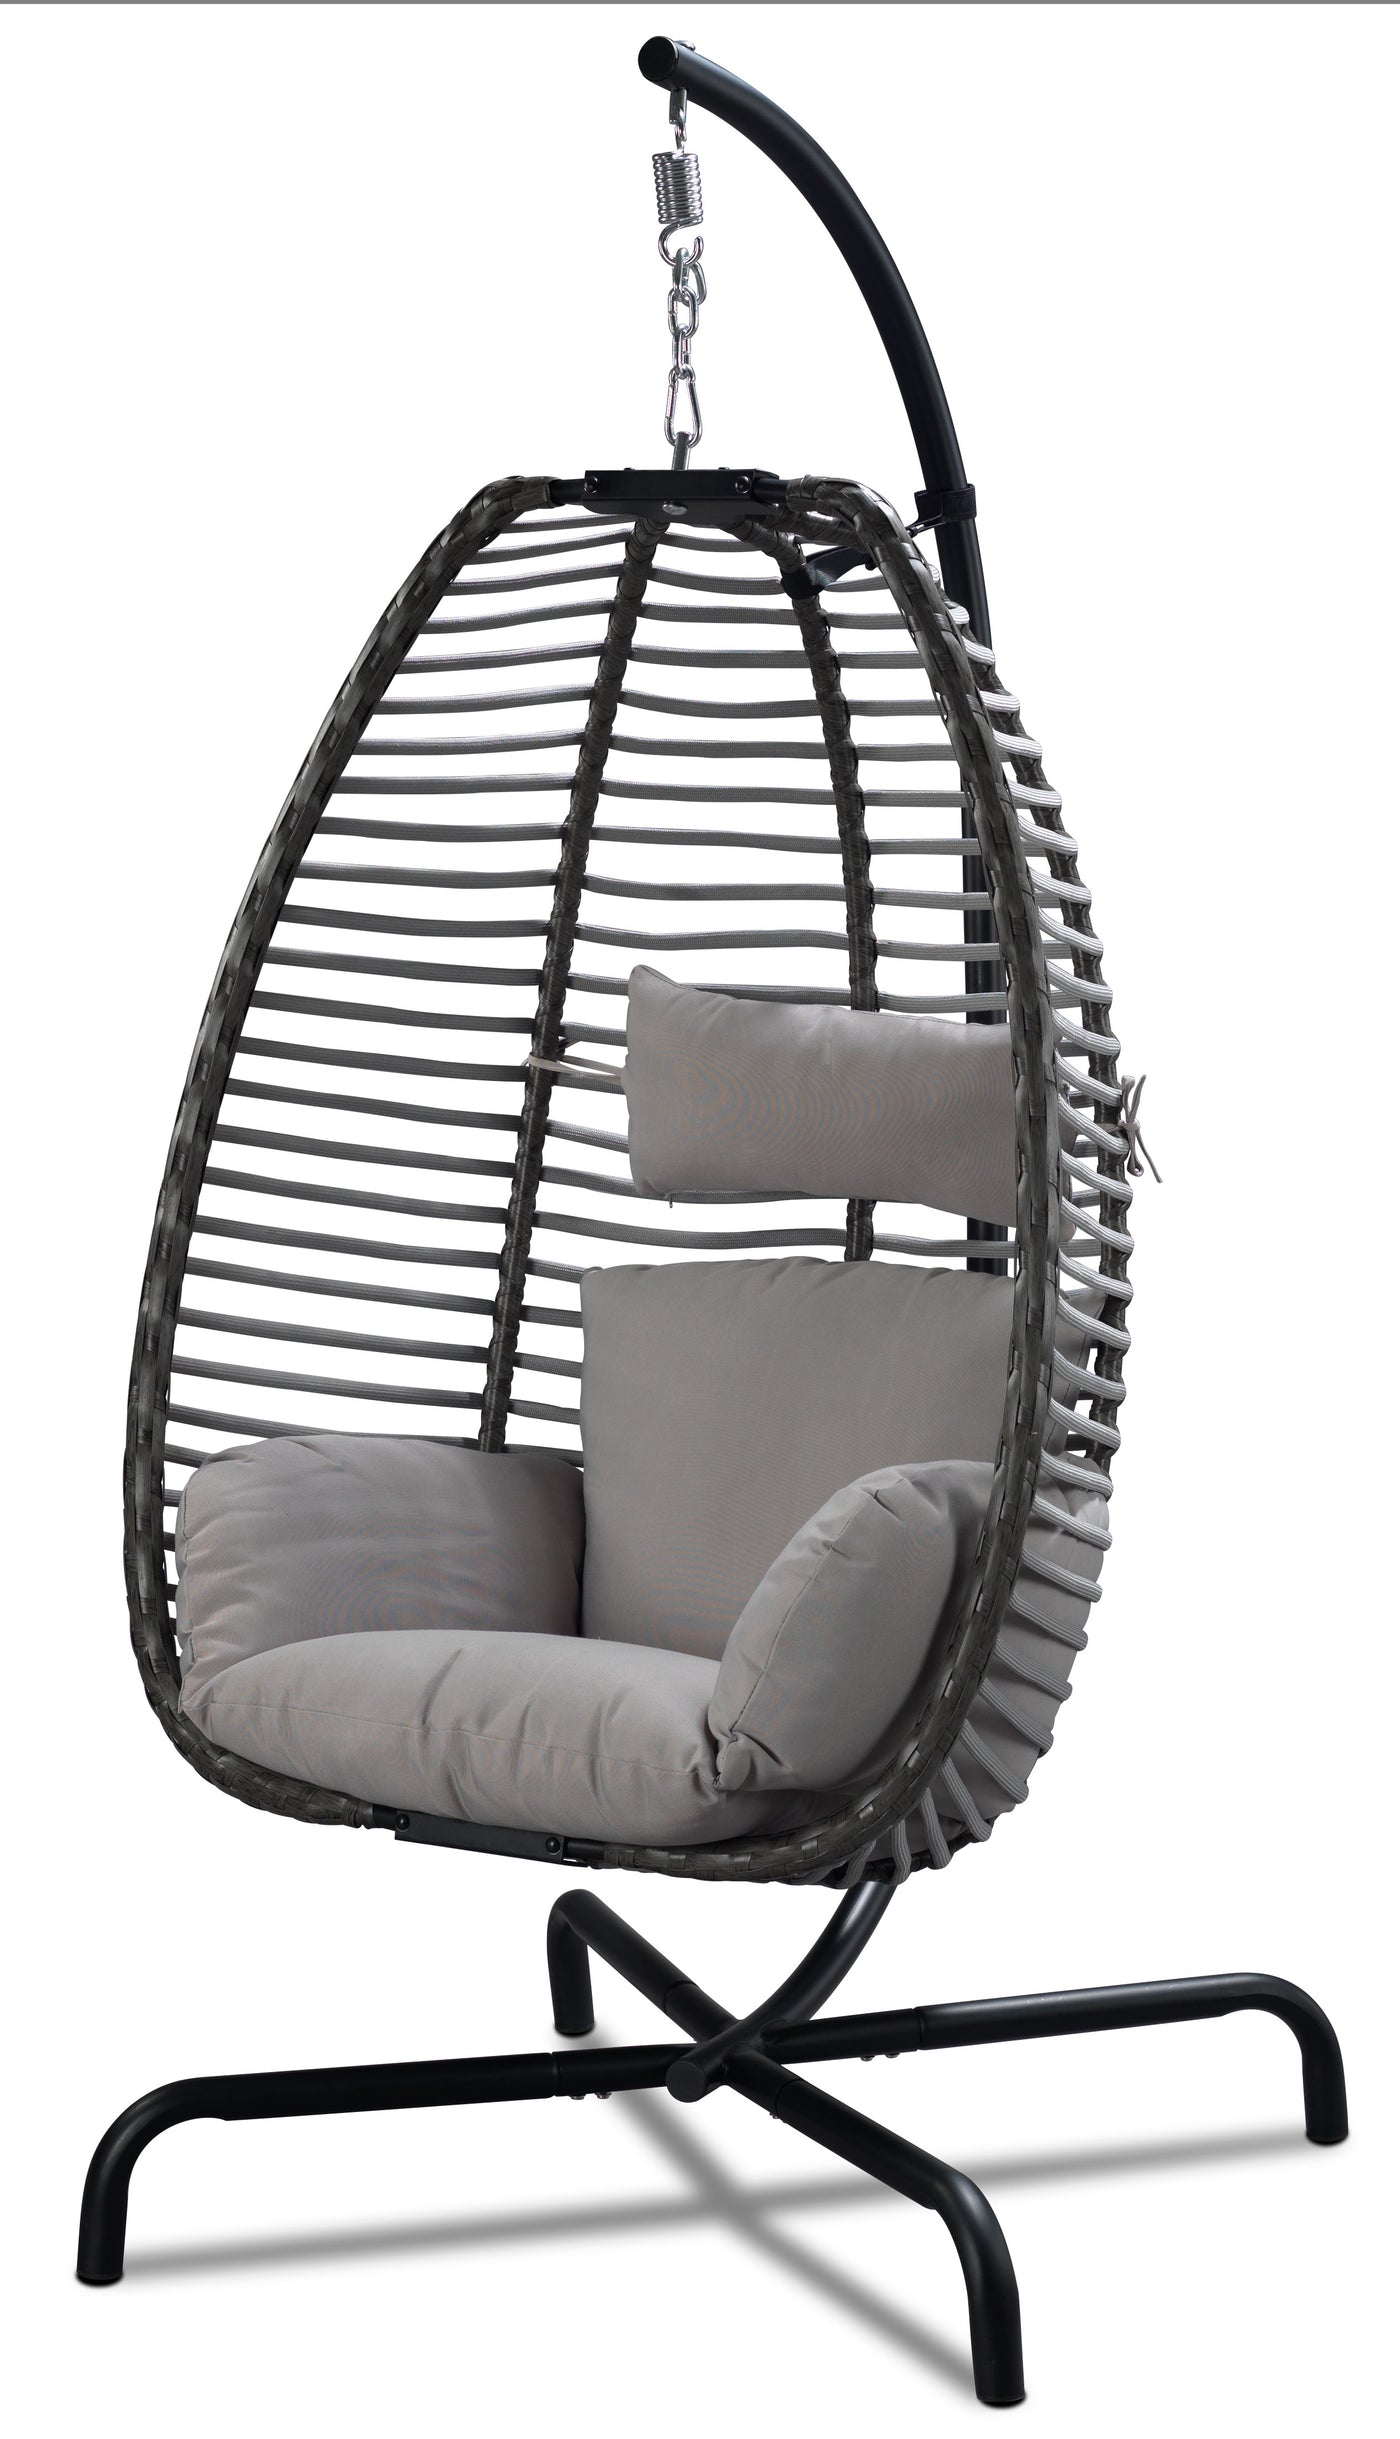 Yara Outdoor Hanging Egg Chair - Grey